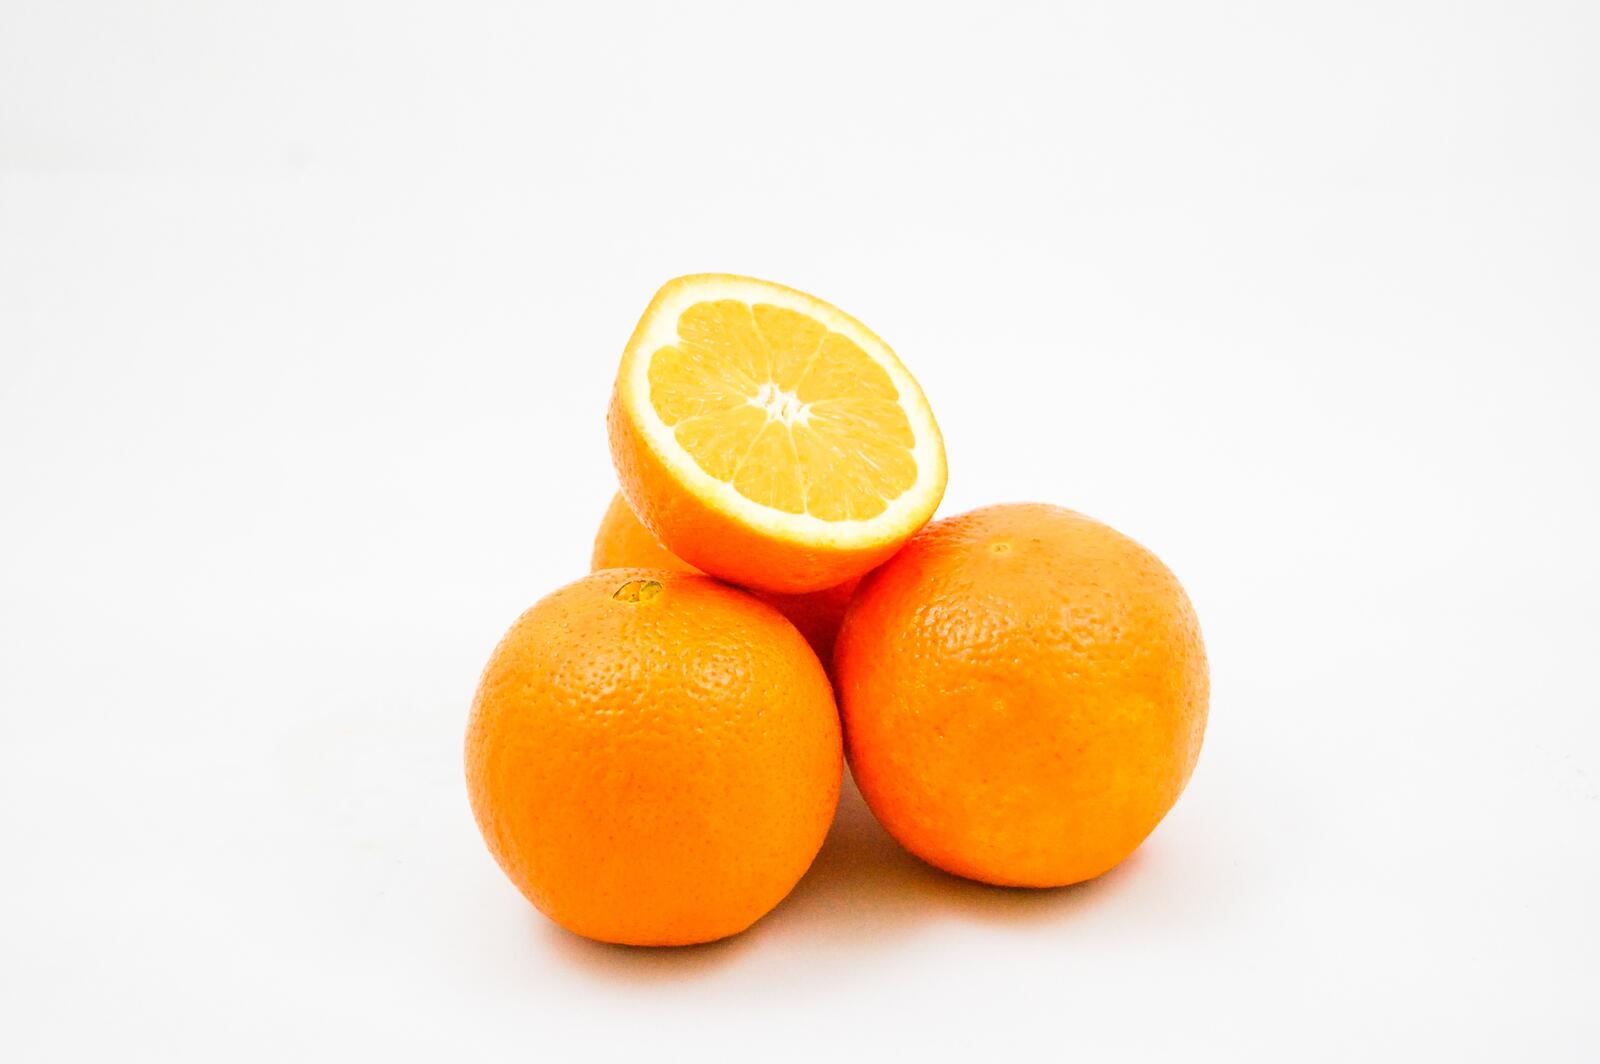 Wallpapers plant fruits orange on the desktop